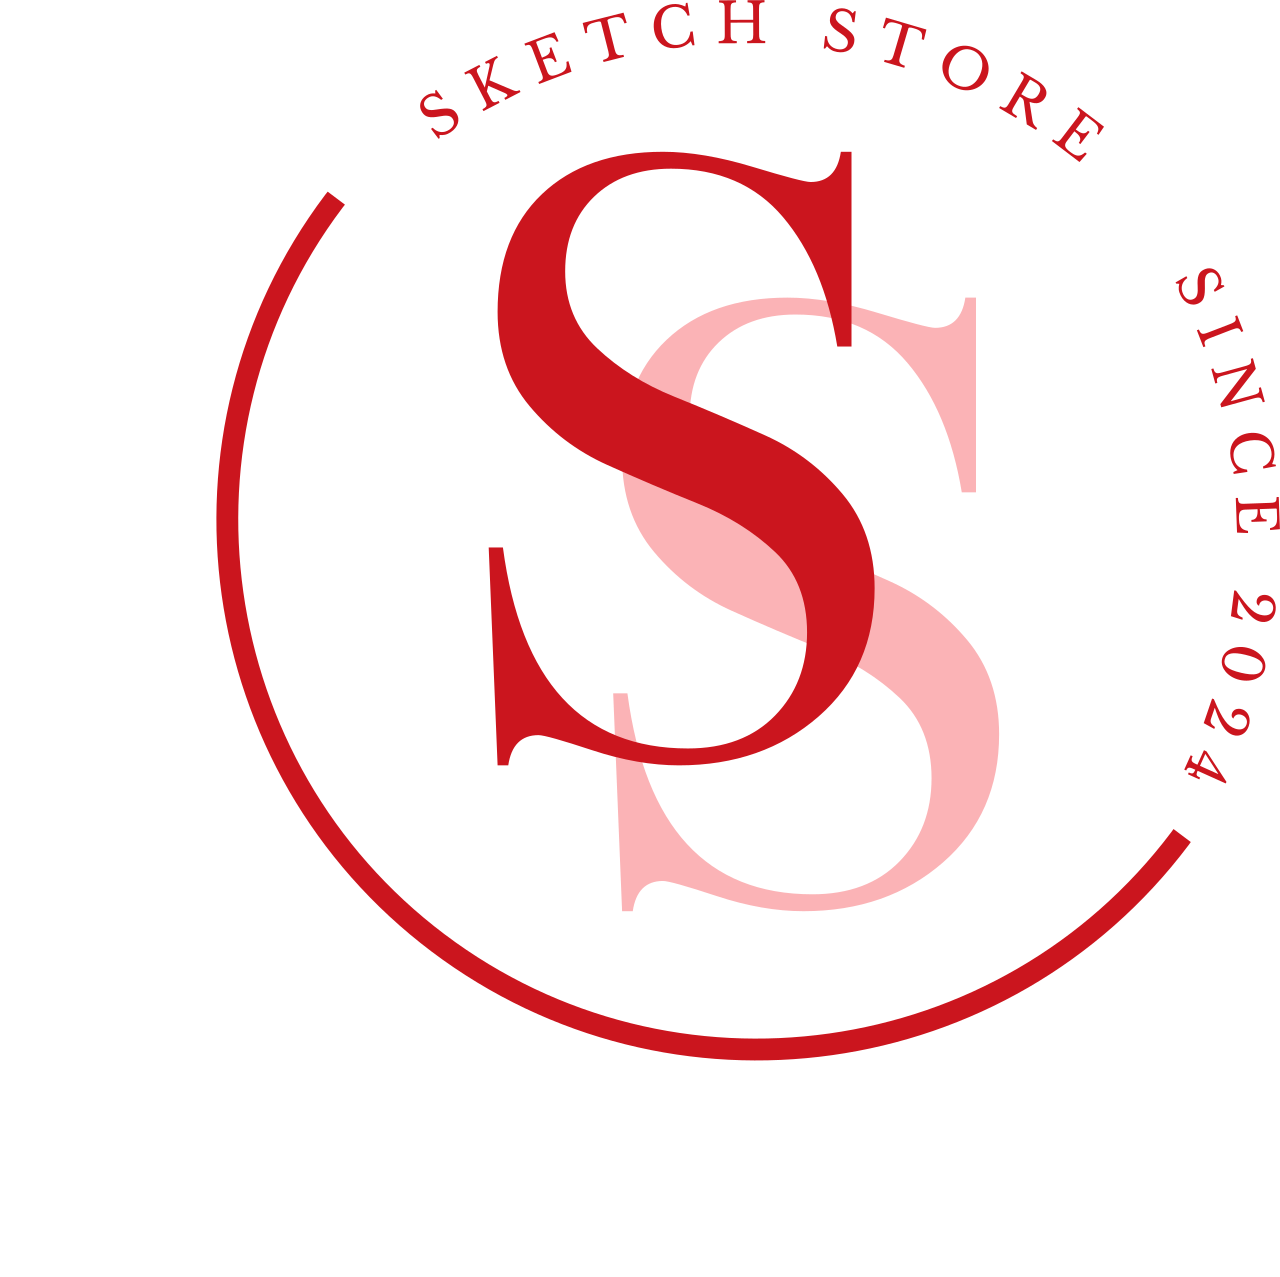 SKETCH STORE's logo